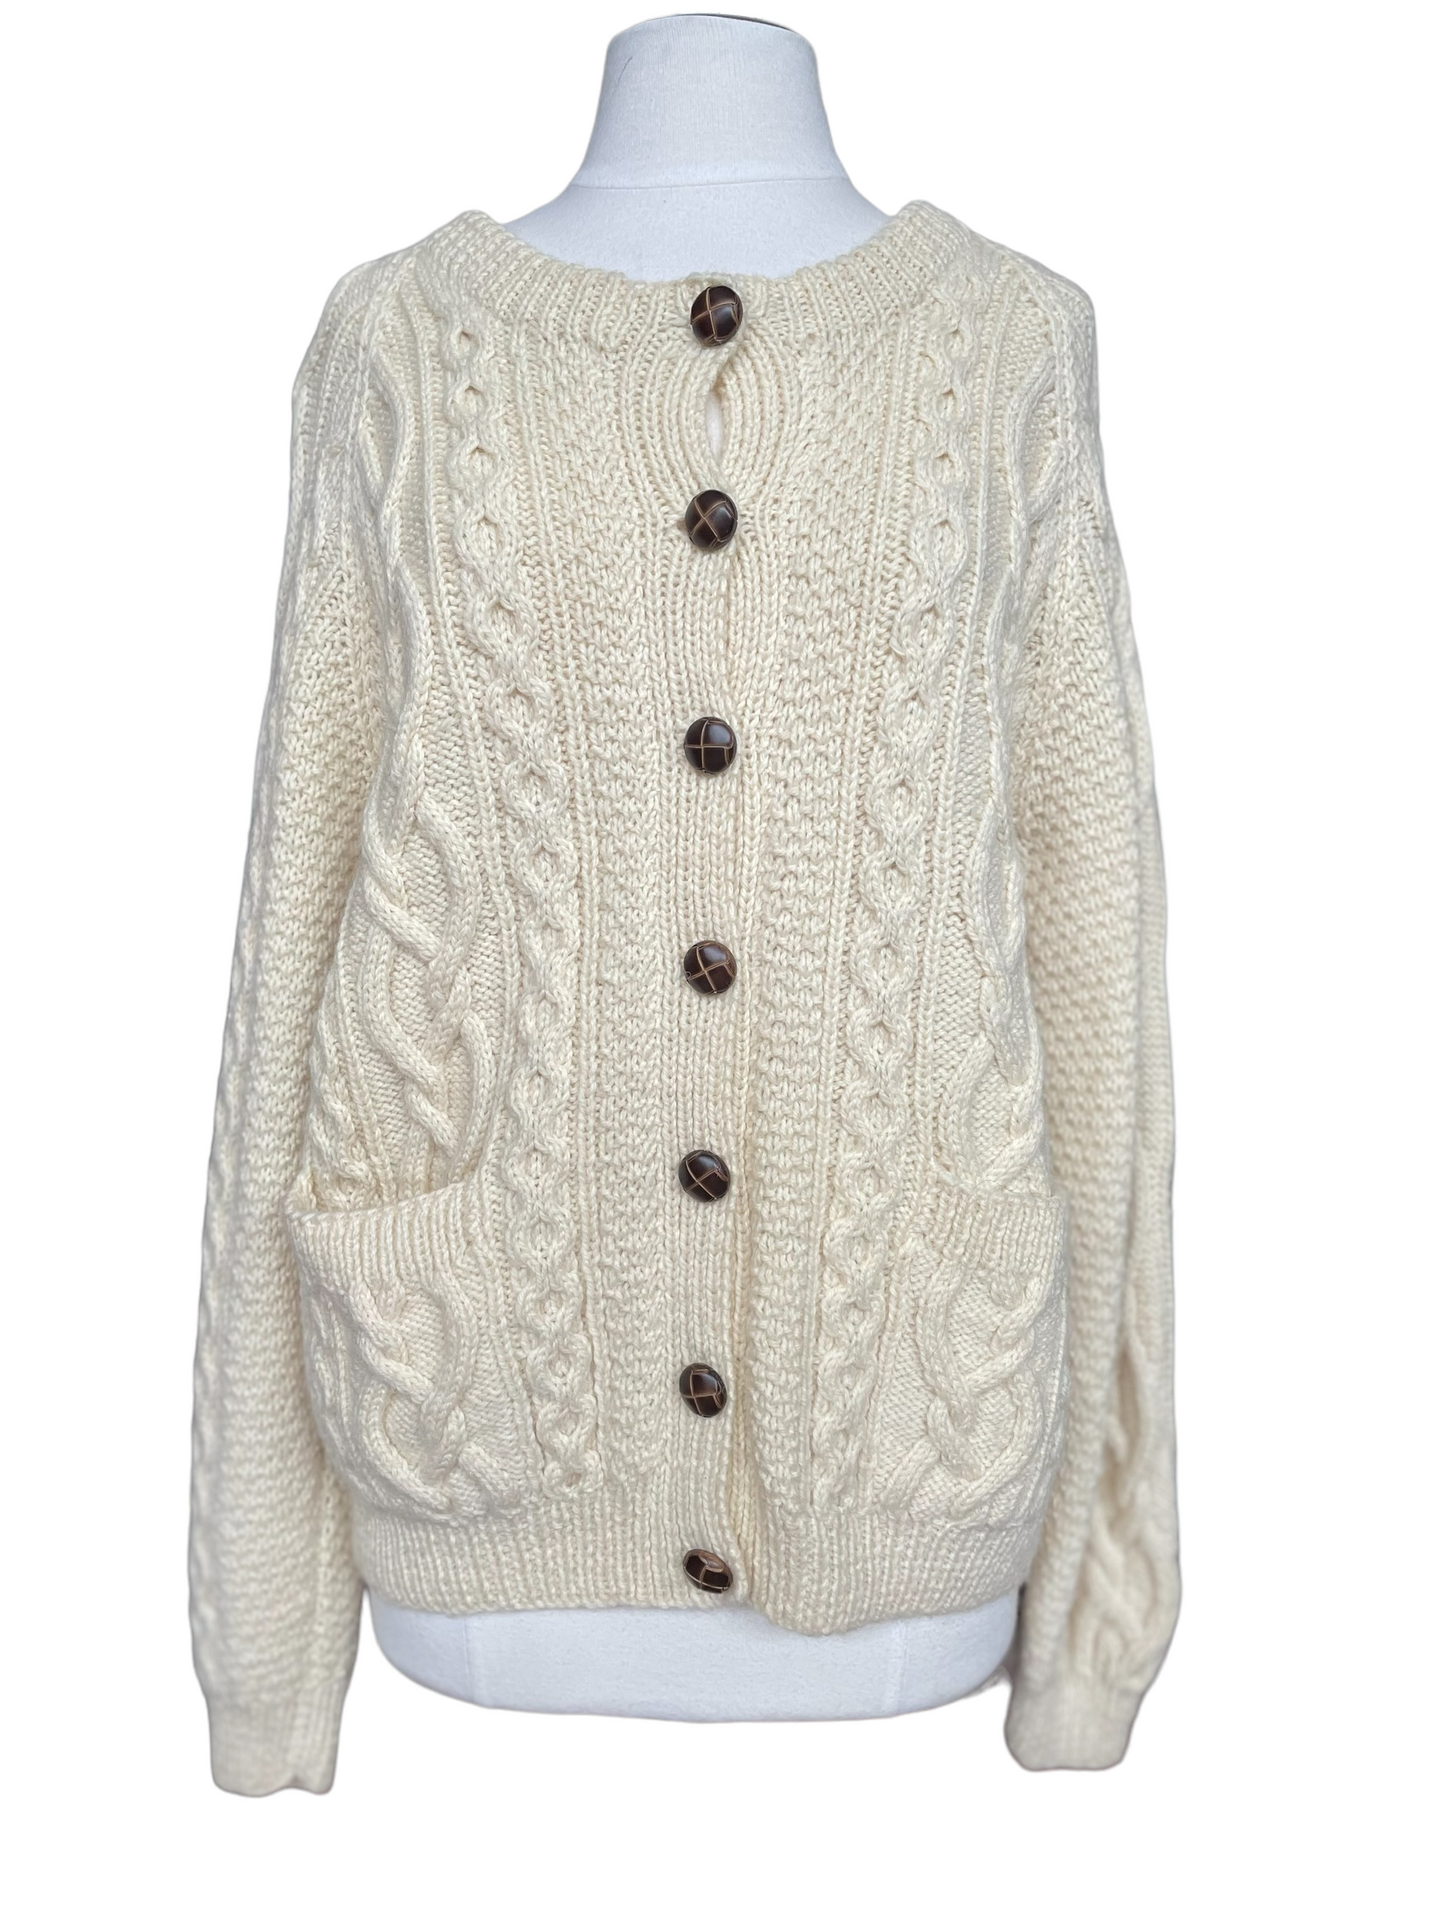 Full front view on dress form Vintage 1980s Blarney Mills Aran Cardigan | Barn Owl Vintage | Seattle Vintage Sweaters